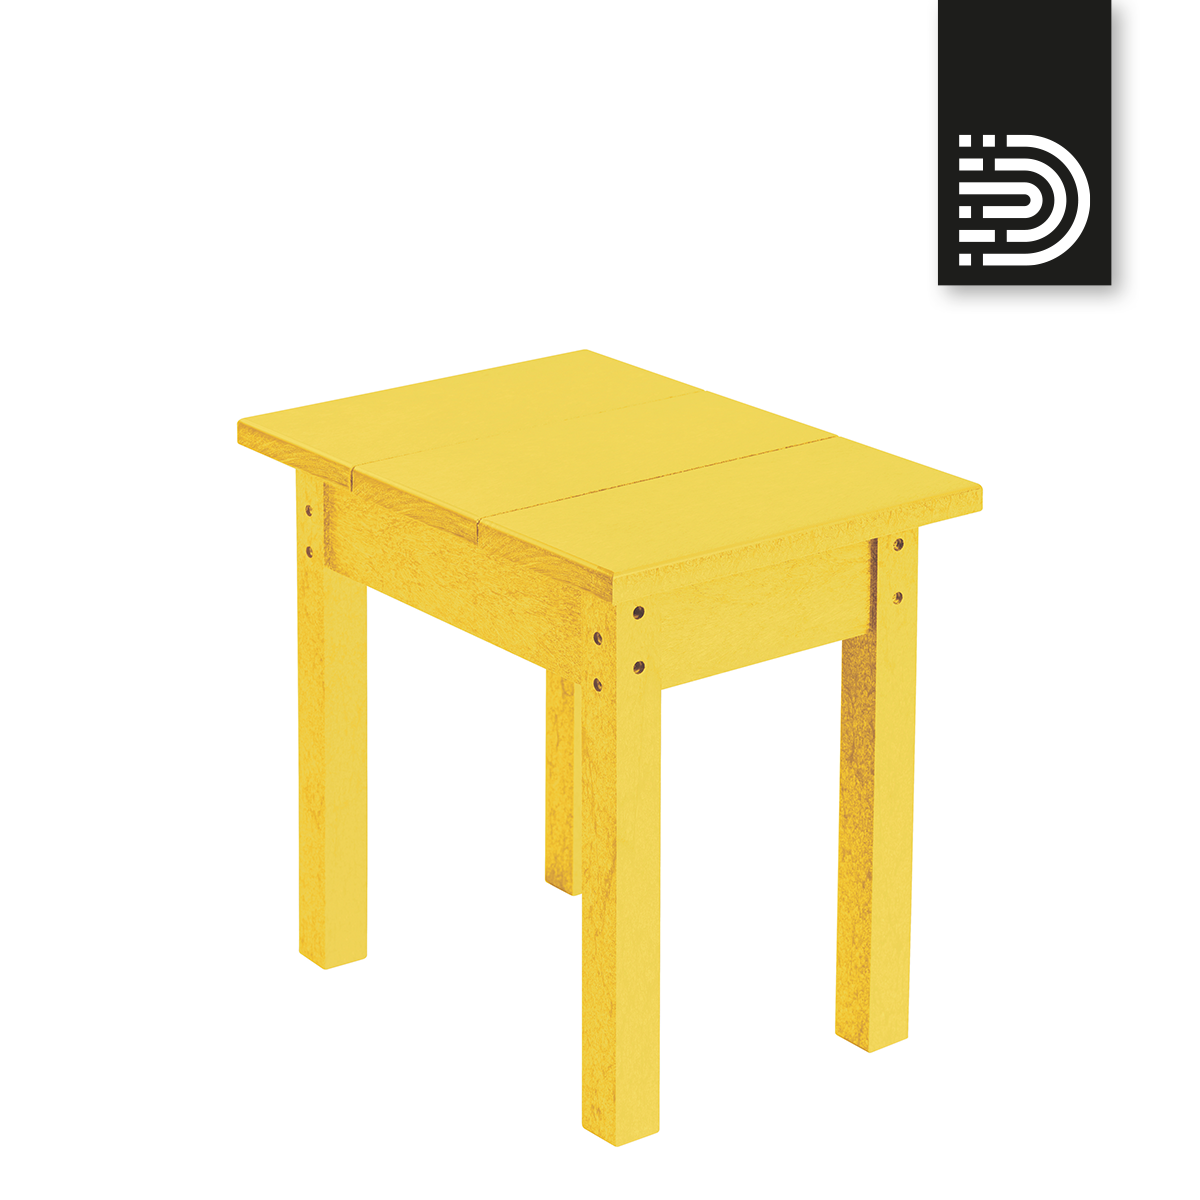 T01 small rectangular table - yellow 04